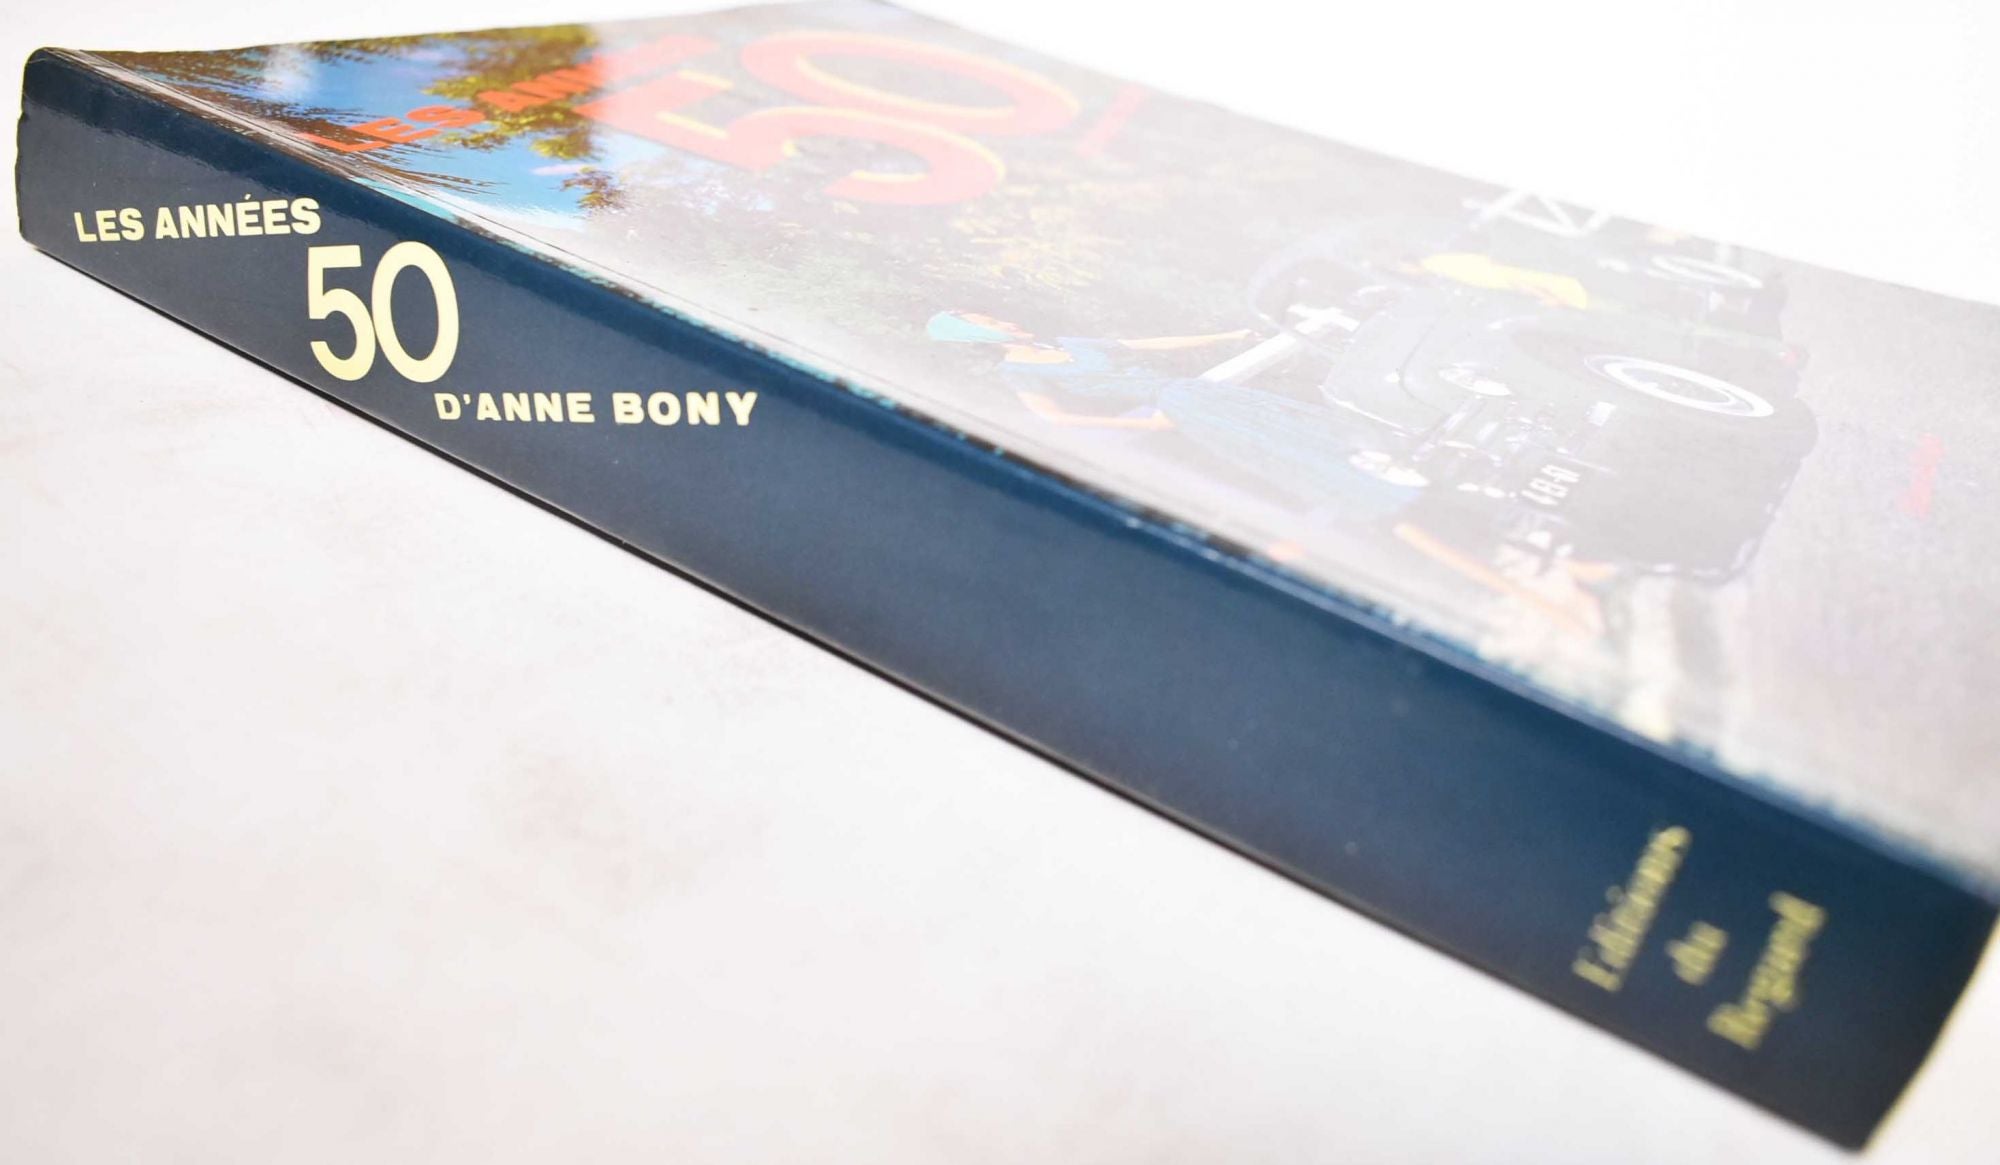 Les Annees 50 d'Anne Bony by Anne Bony on Mullen Books